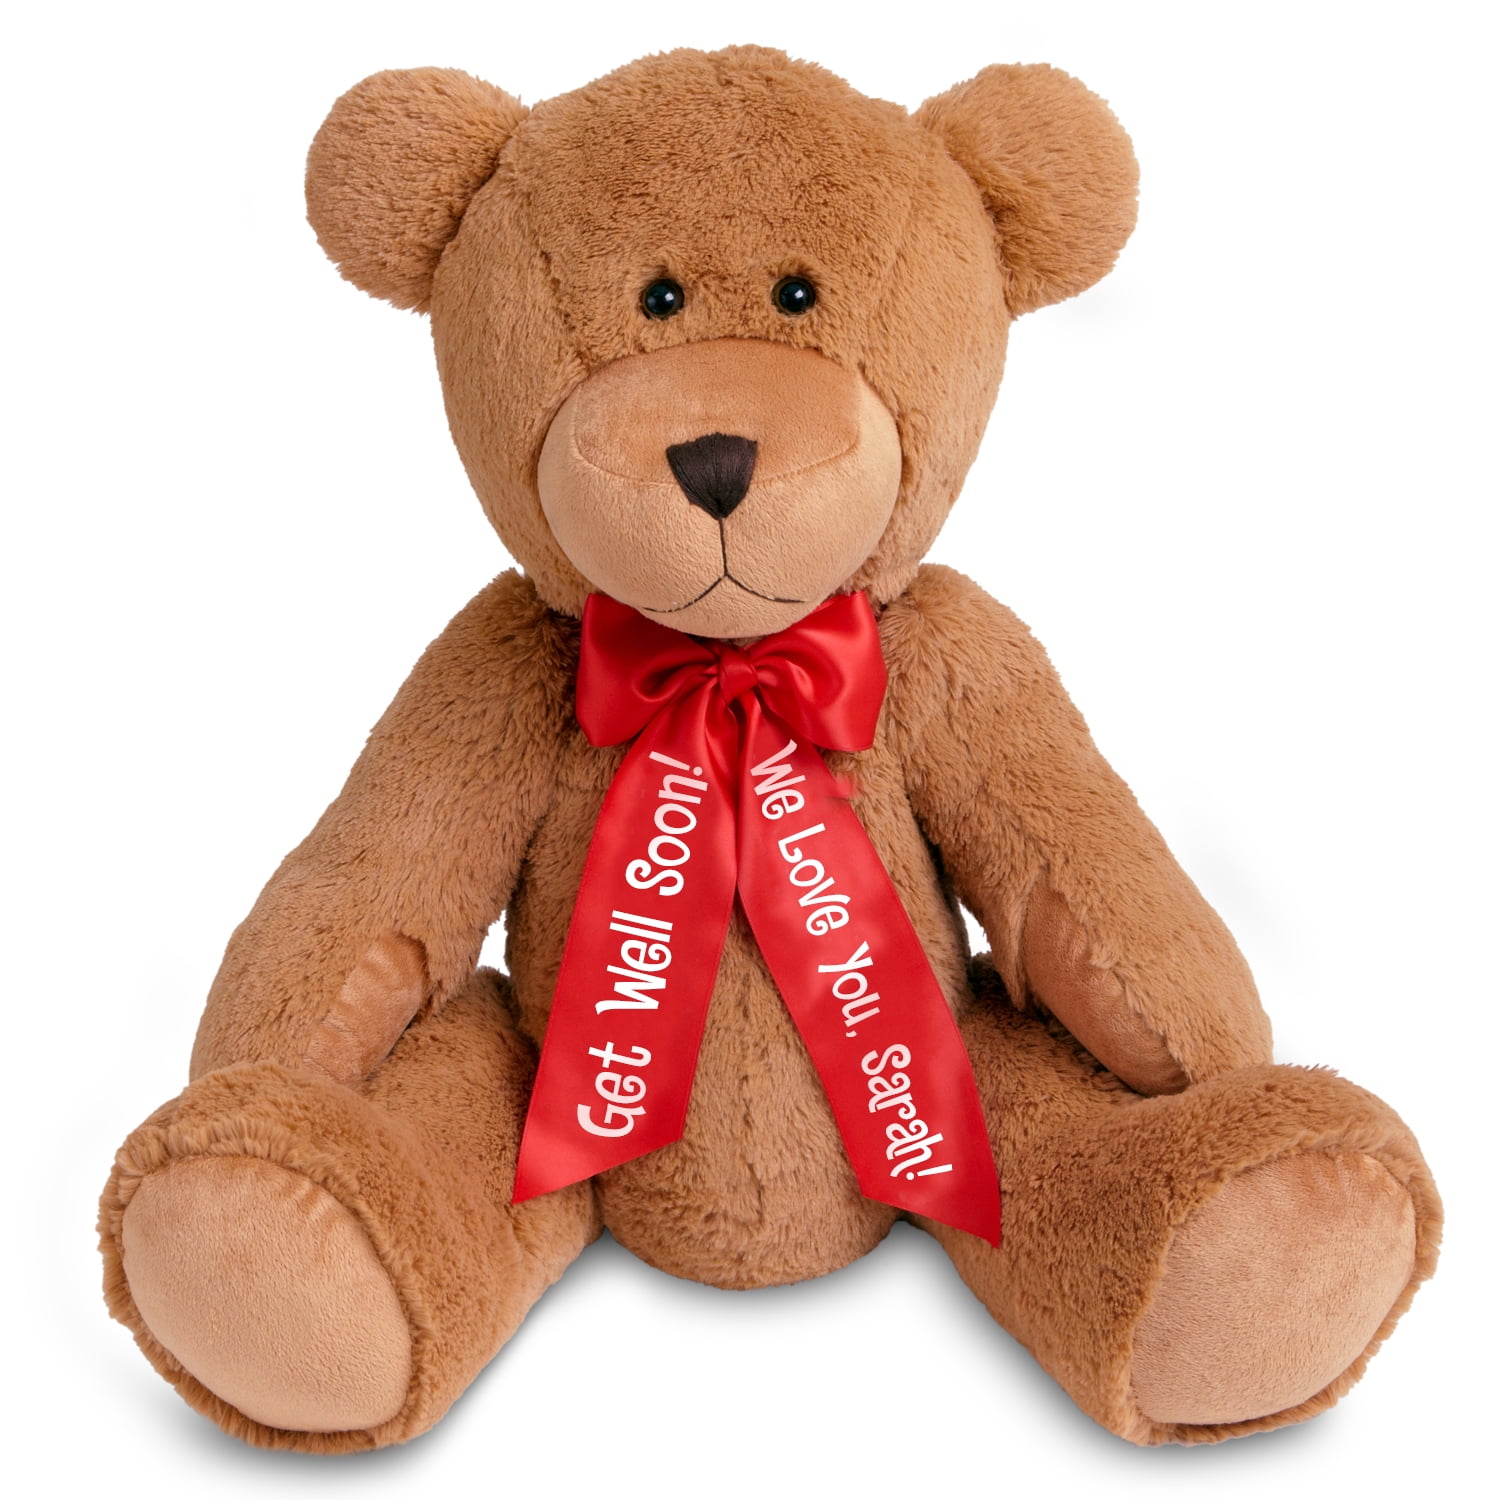 personalized teddy bears